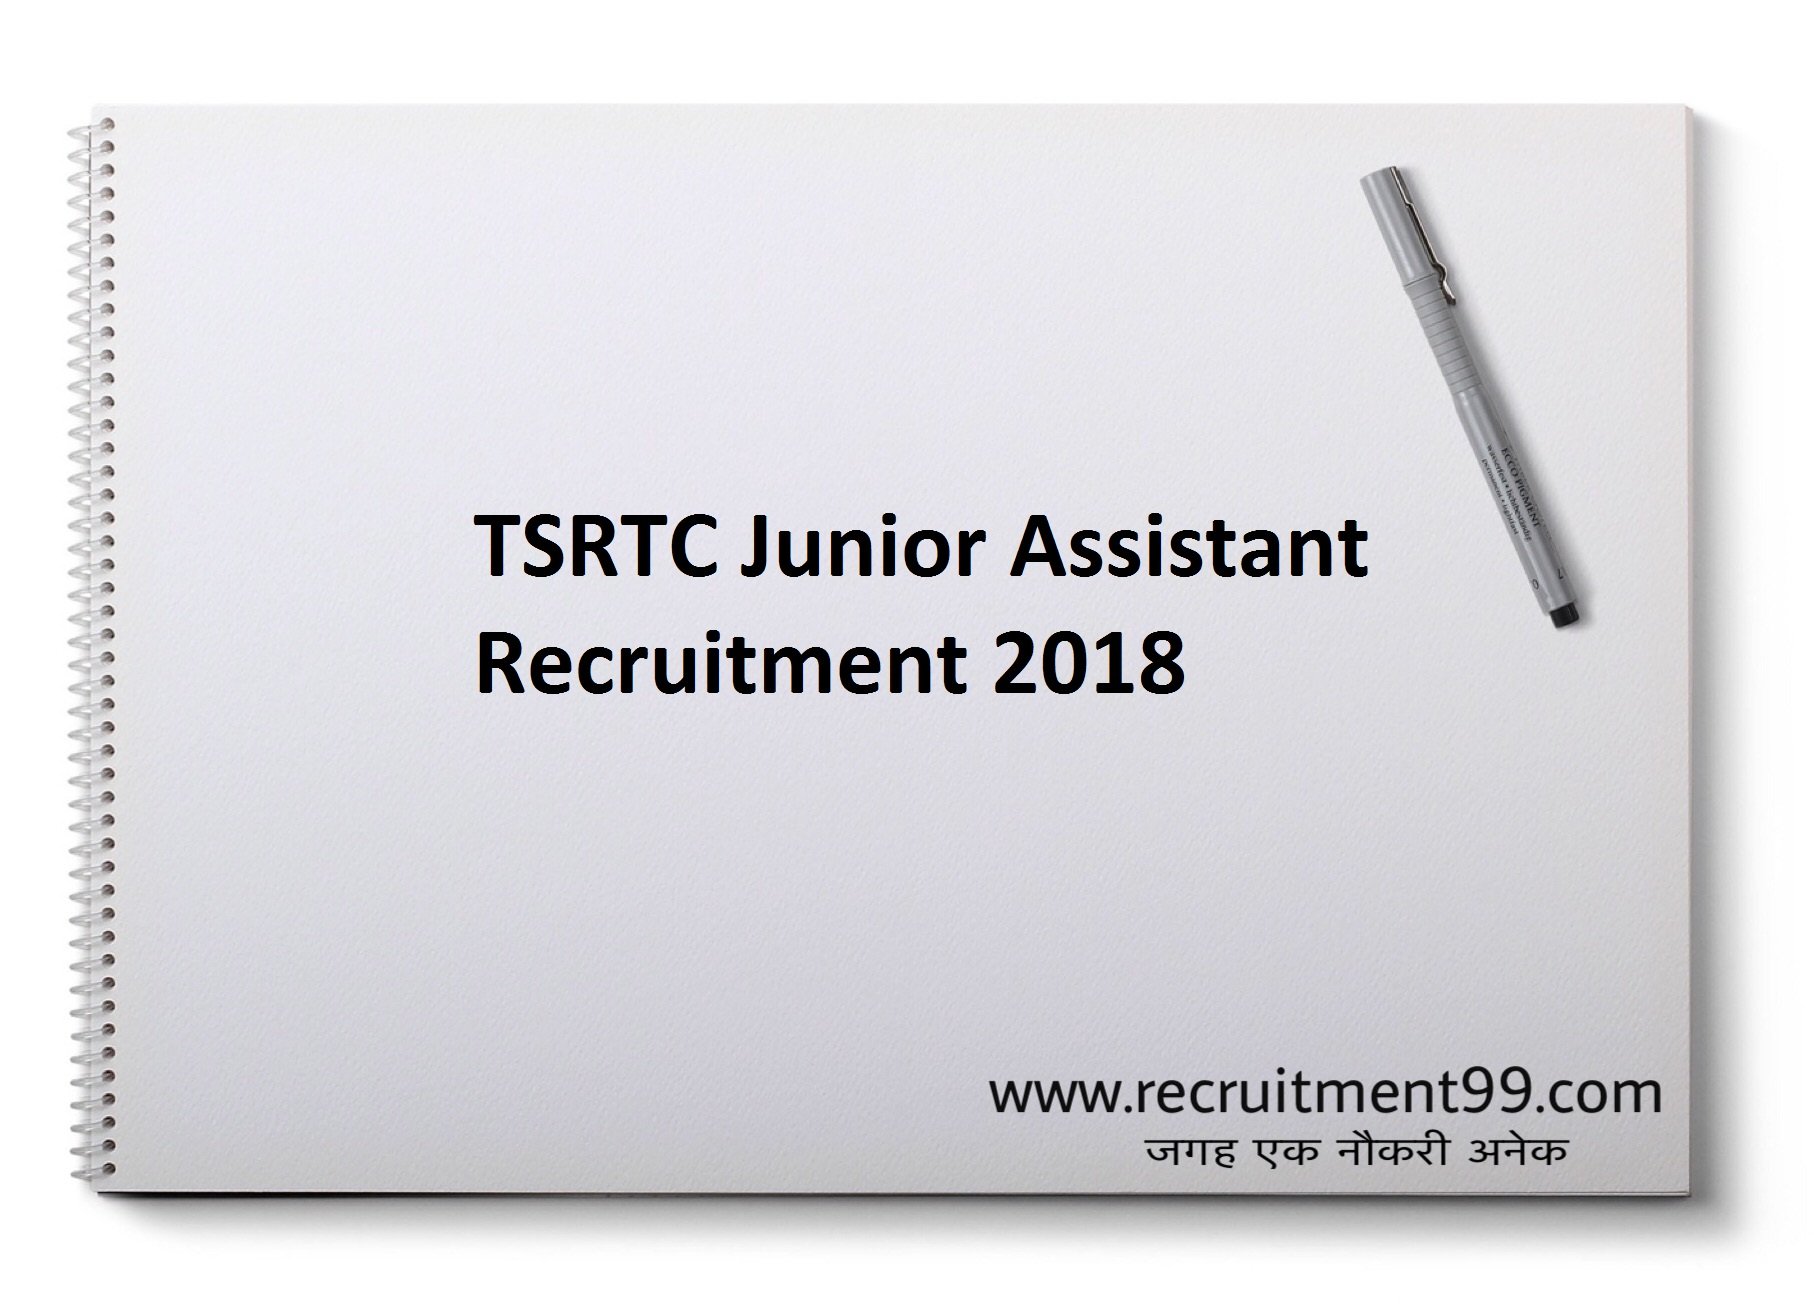 TSRTC Junior Assistant Recruitment Hall ticket Result 2018